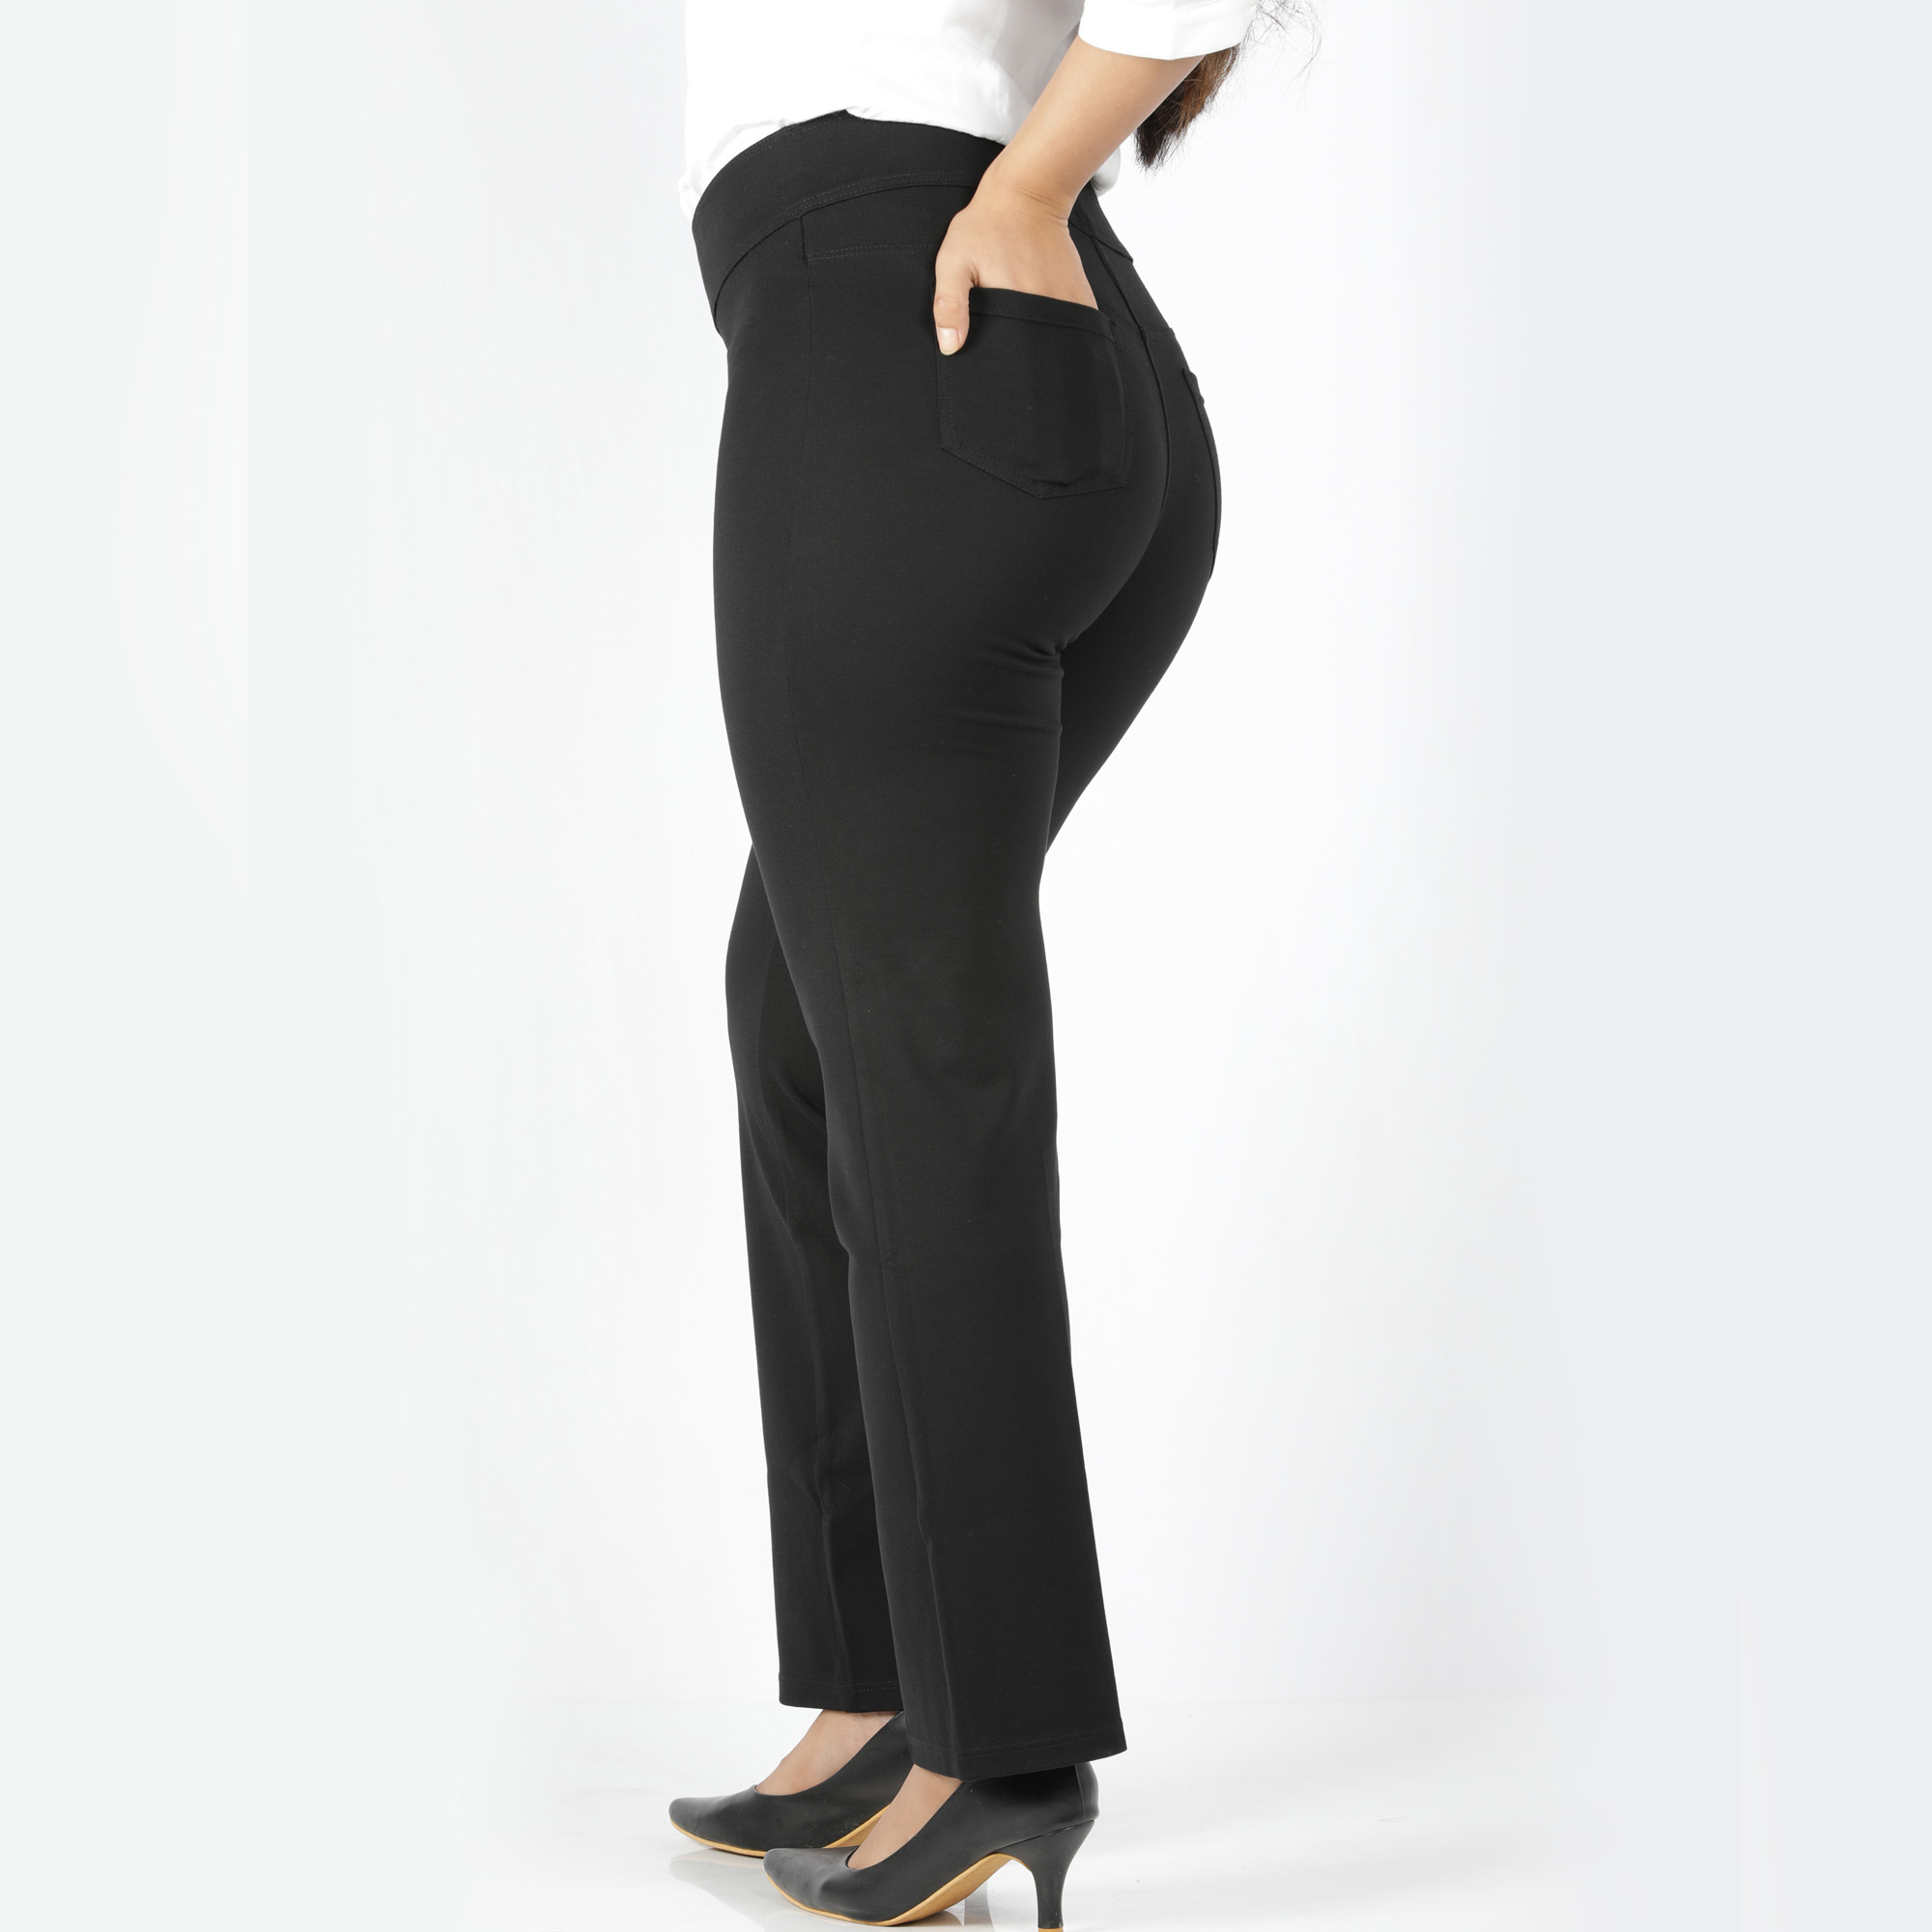 Black pants women - Tummy tucker straight leg - 2 back pockets - Belore  Slims